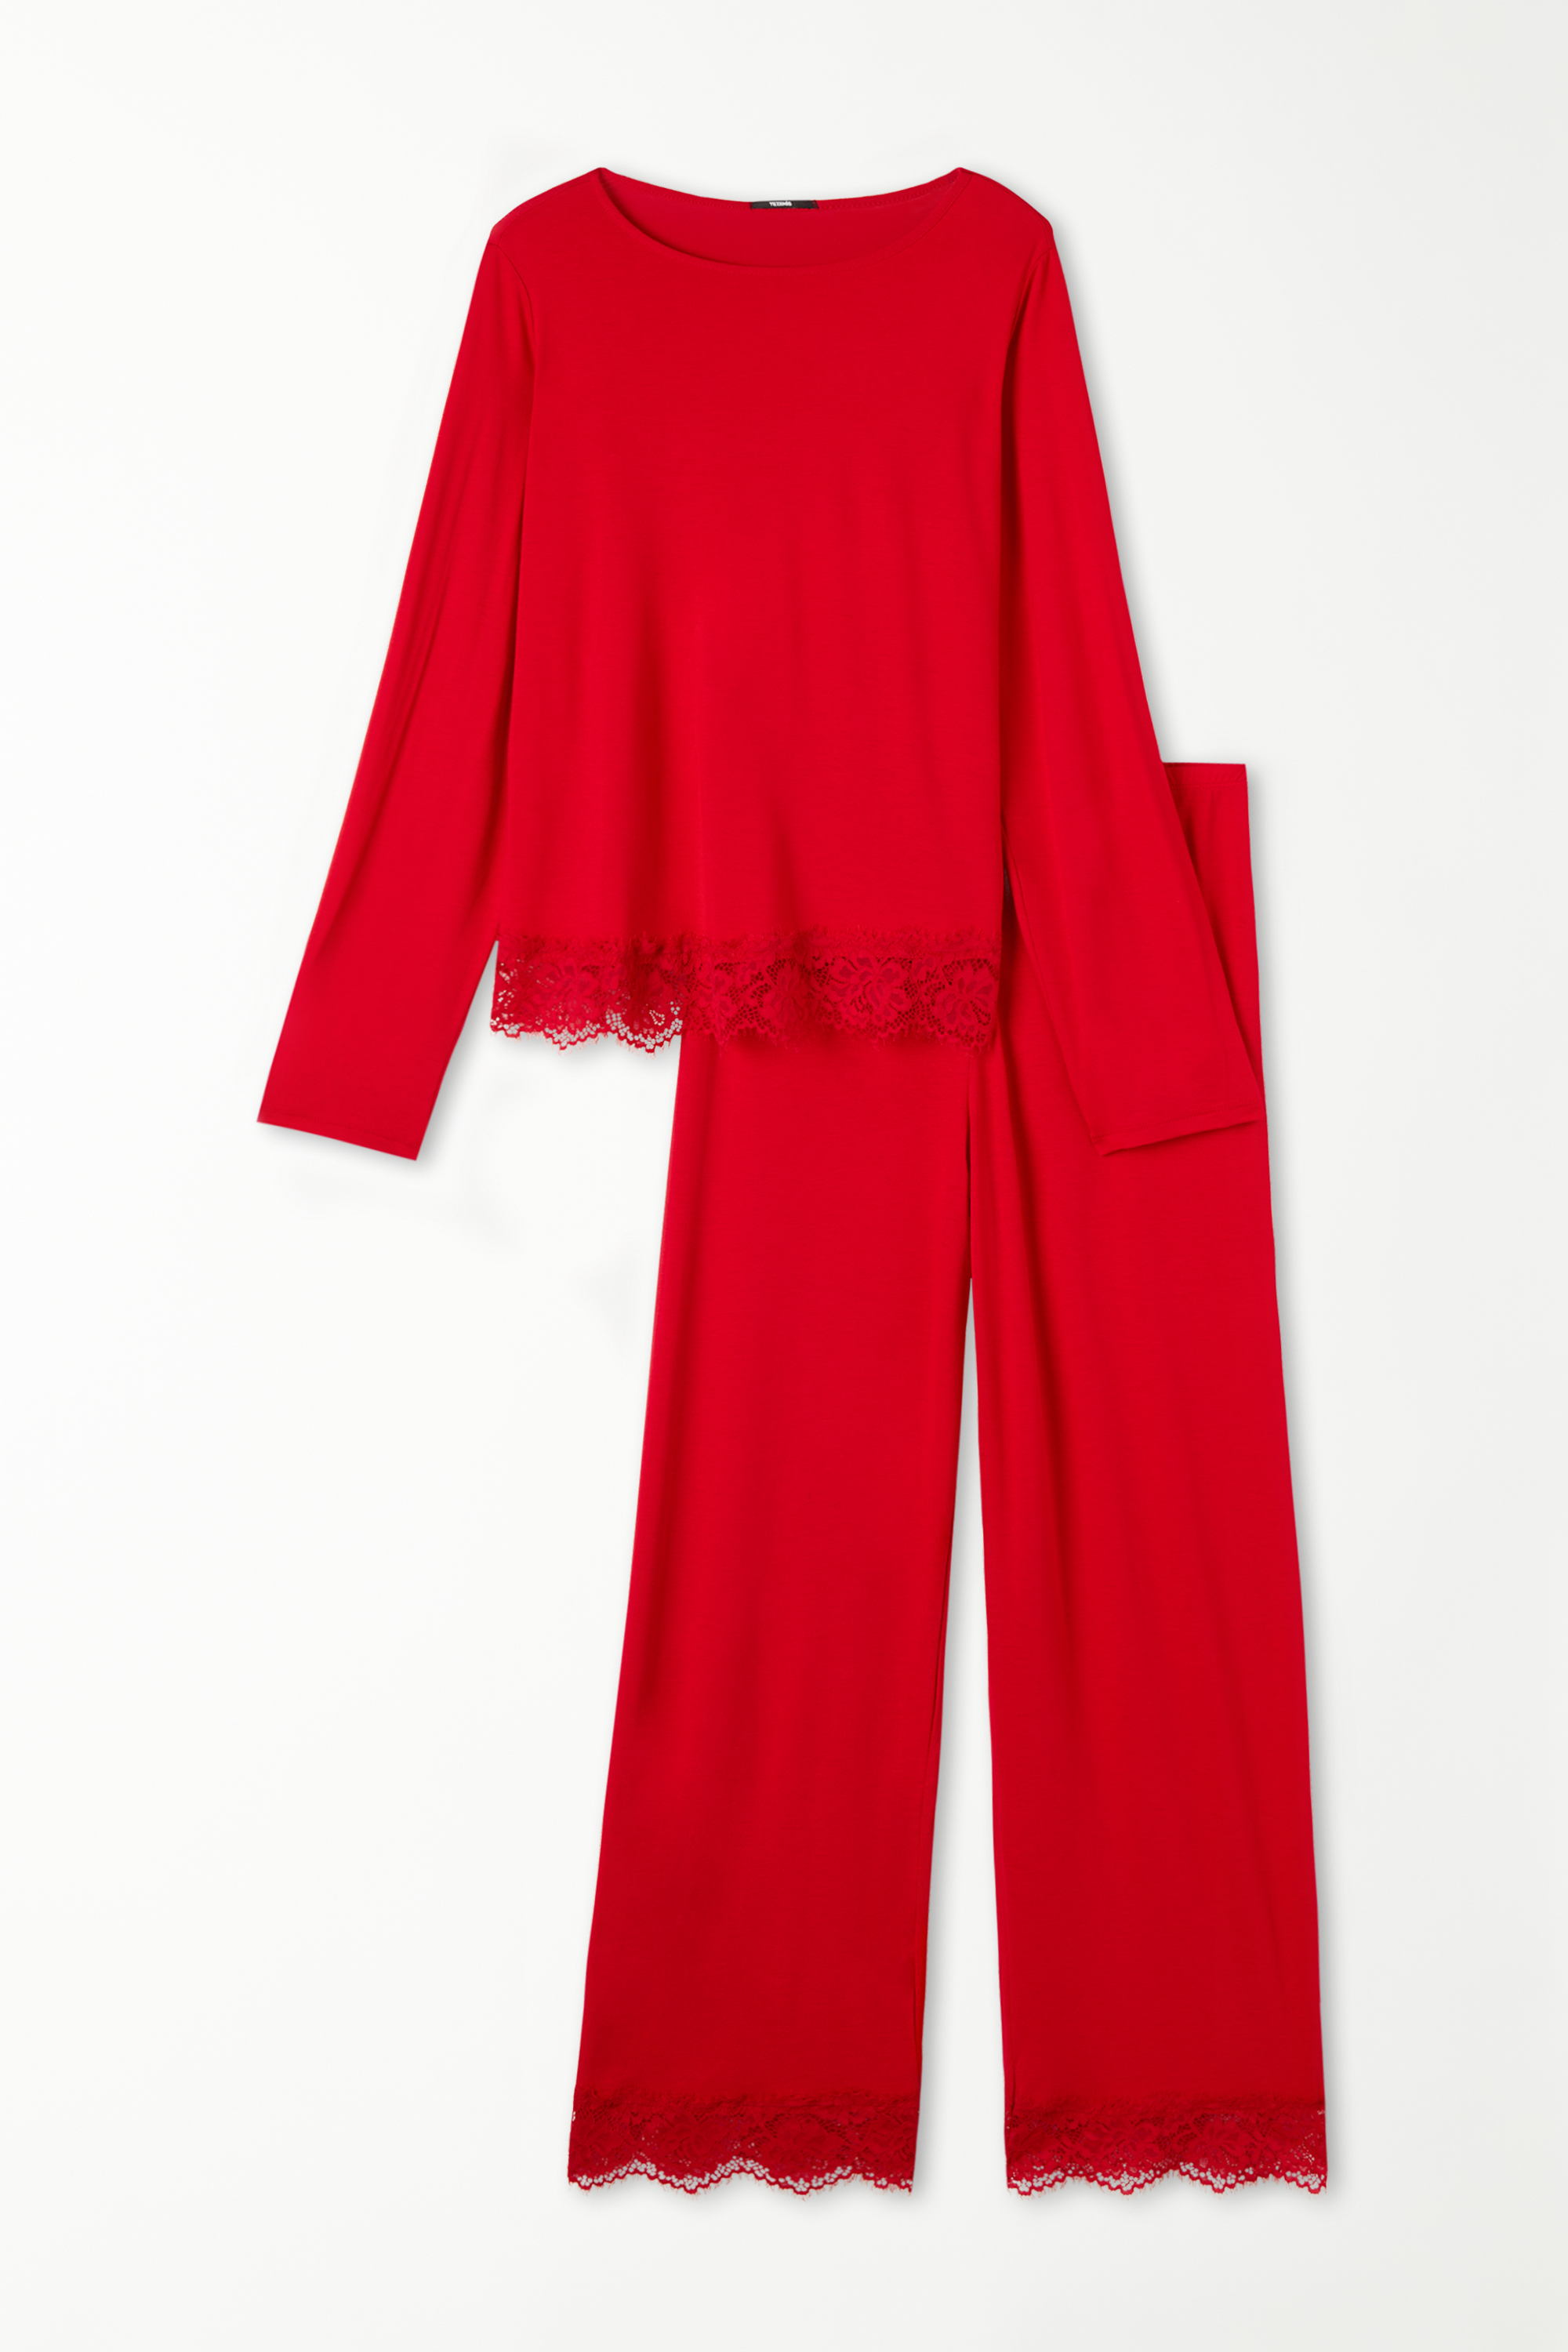 Full-Length Viscose Pajamas with Lace